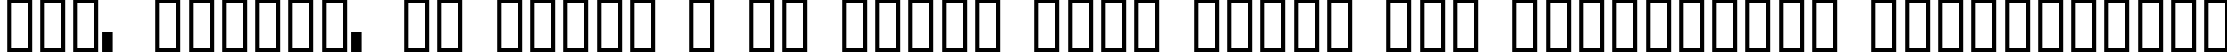 Пример написания шрифтом Pixel текста на украинском